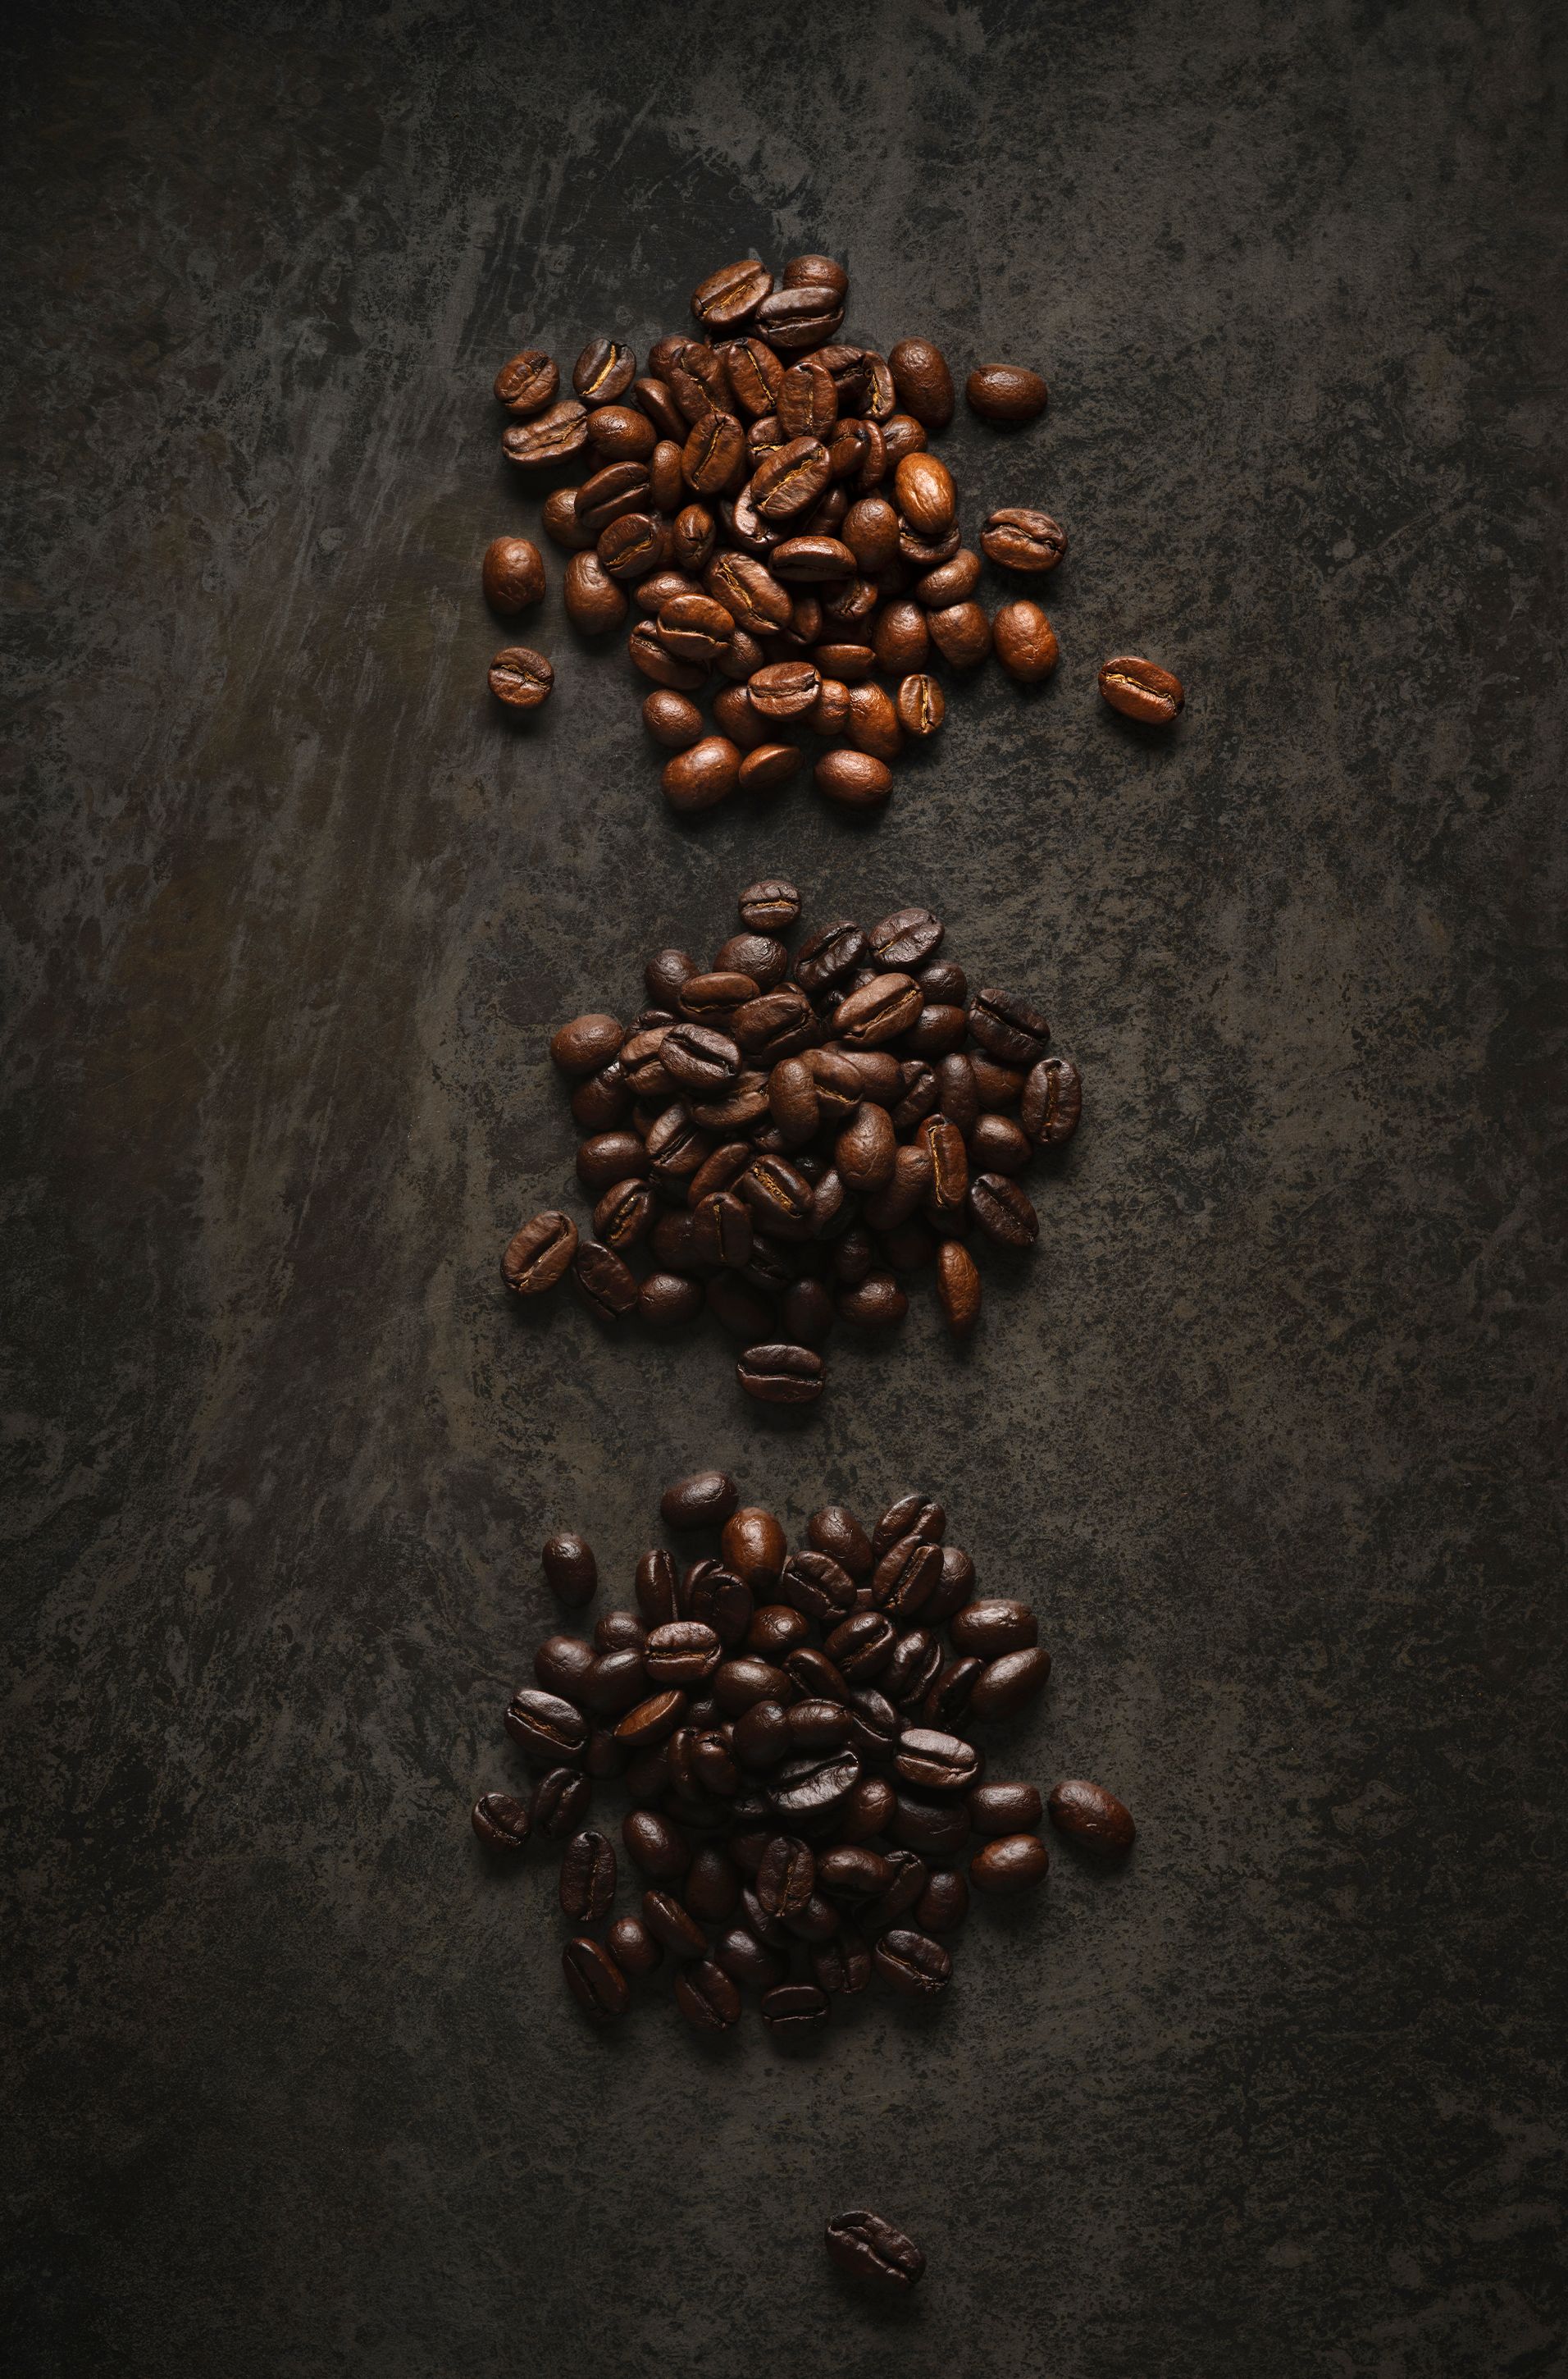 Light, medium and dark Coffee beans